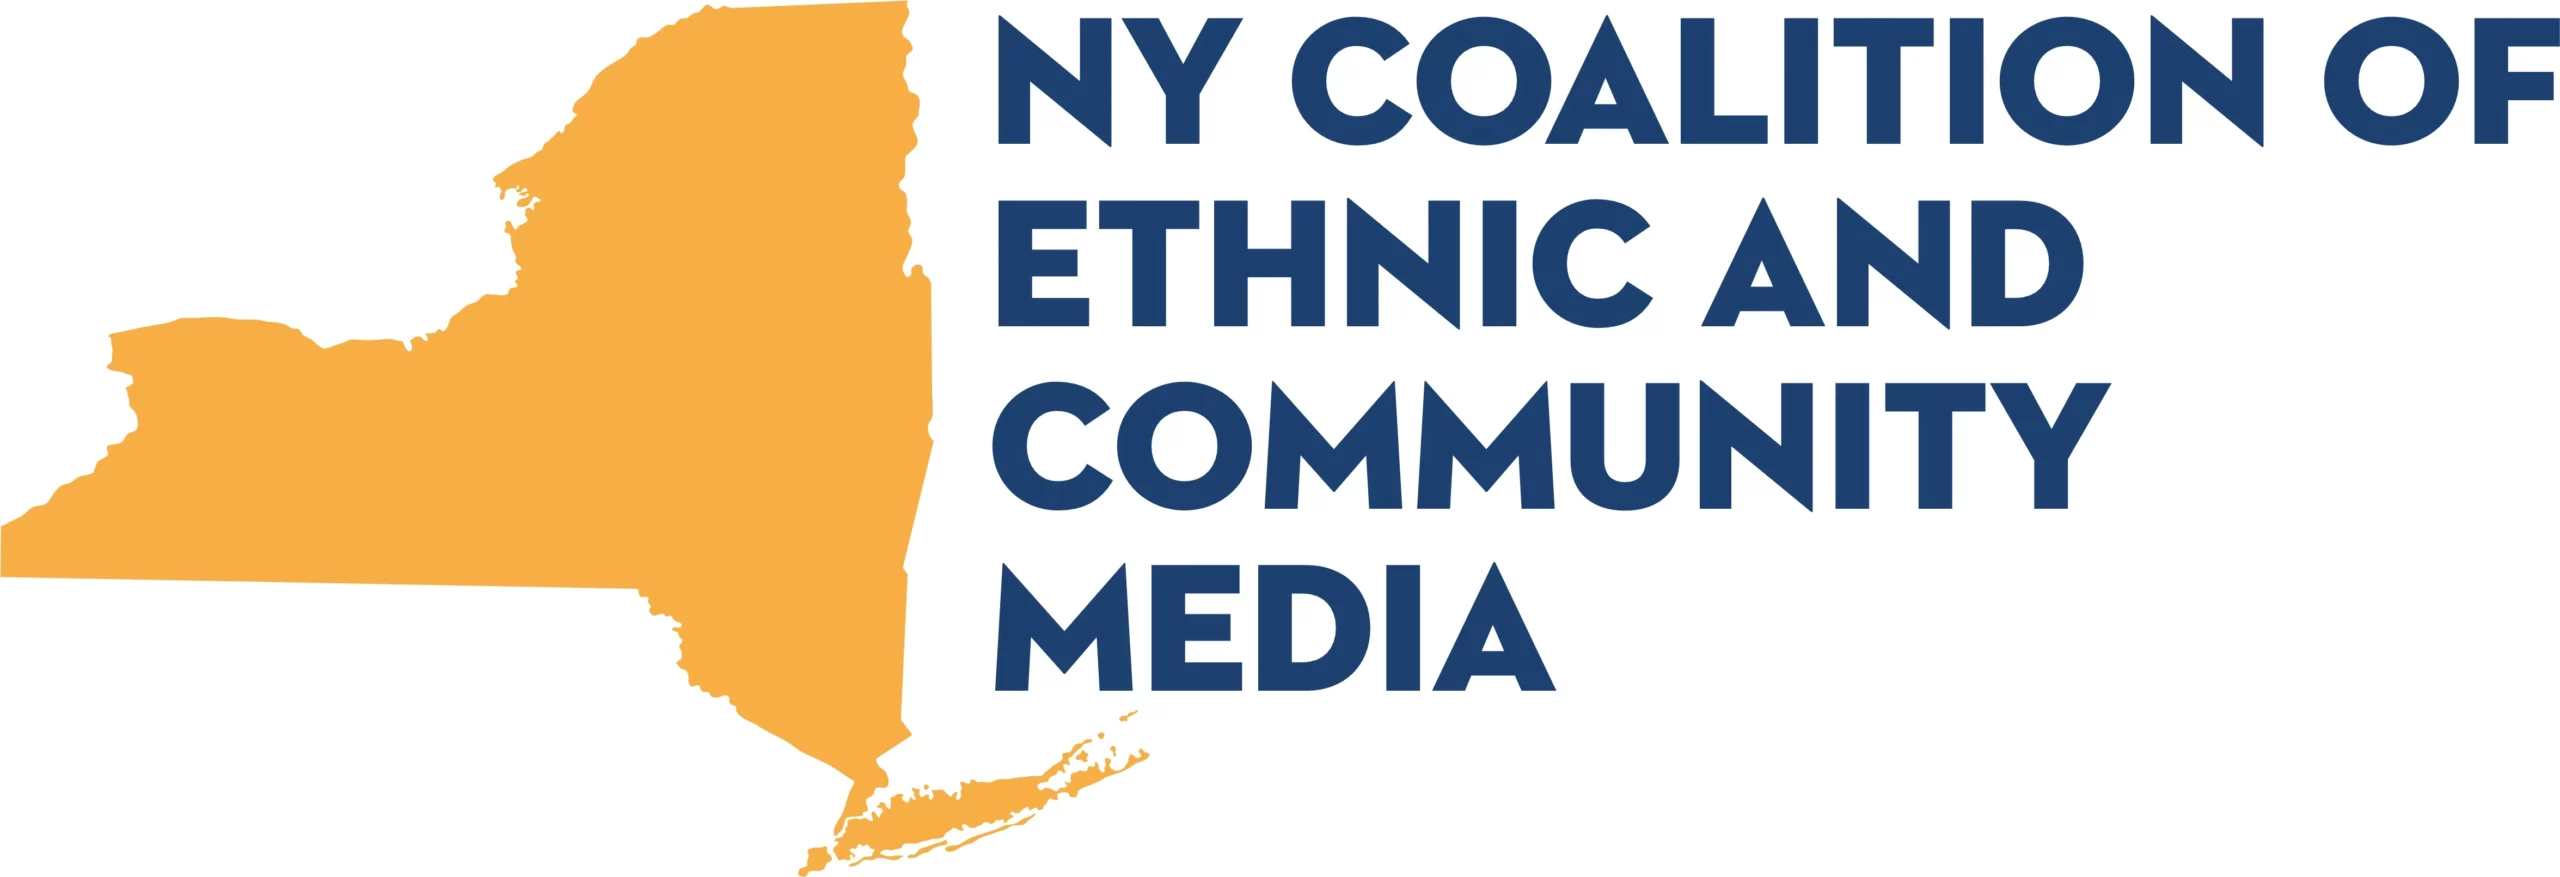 NY Coalition of Ethnic and Community Media